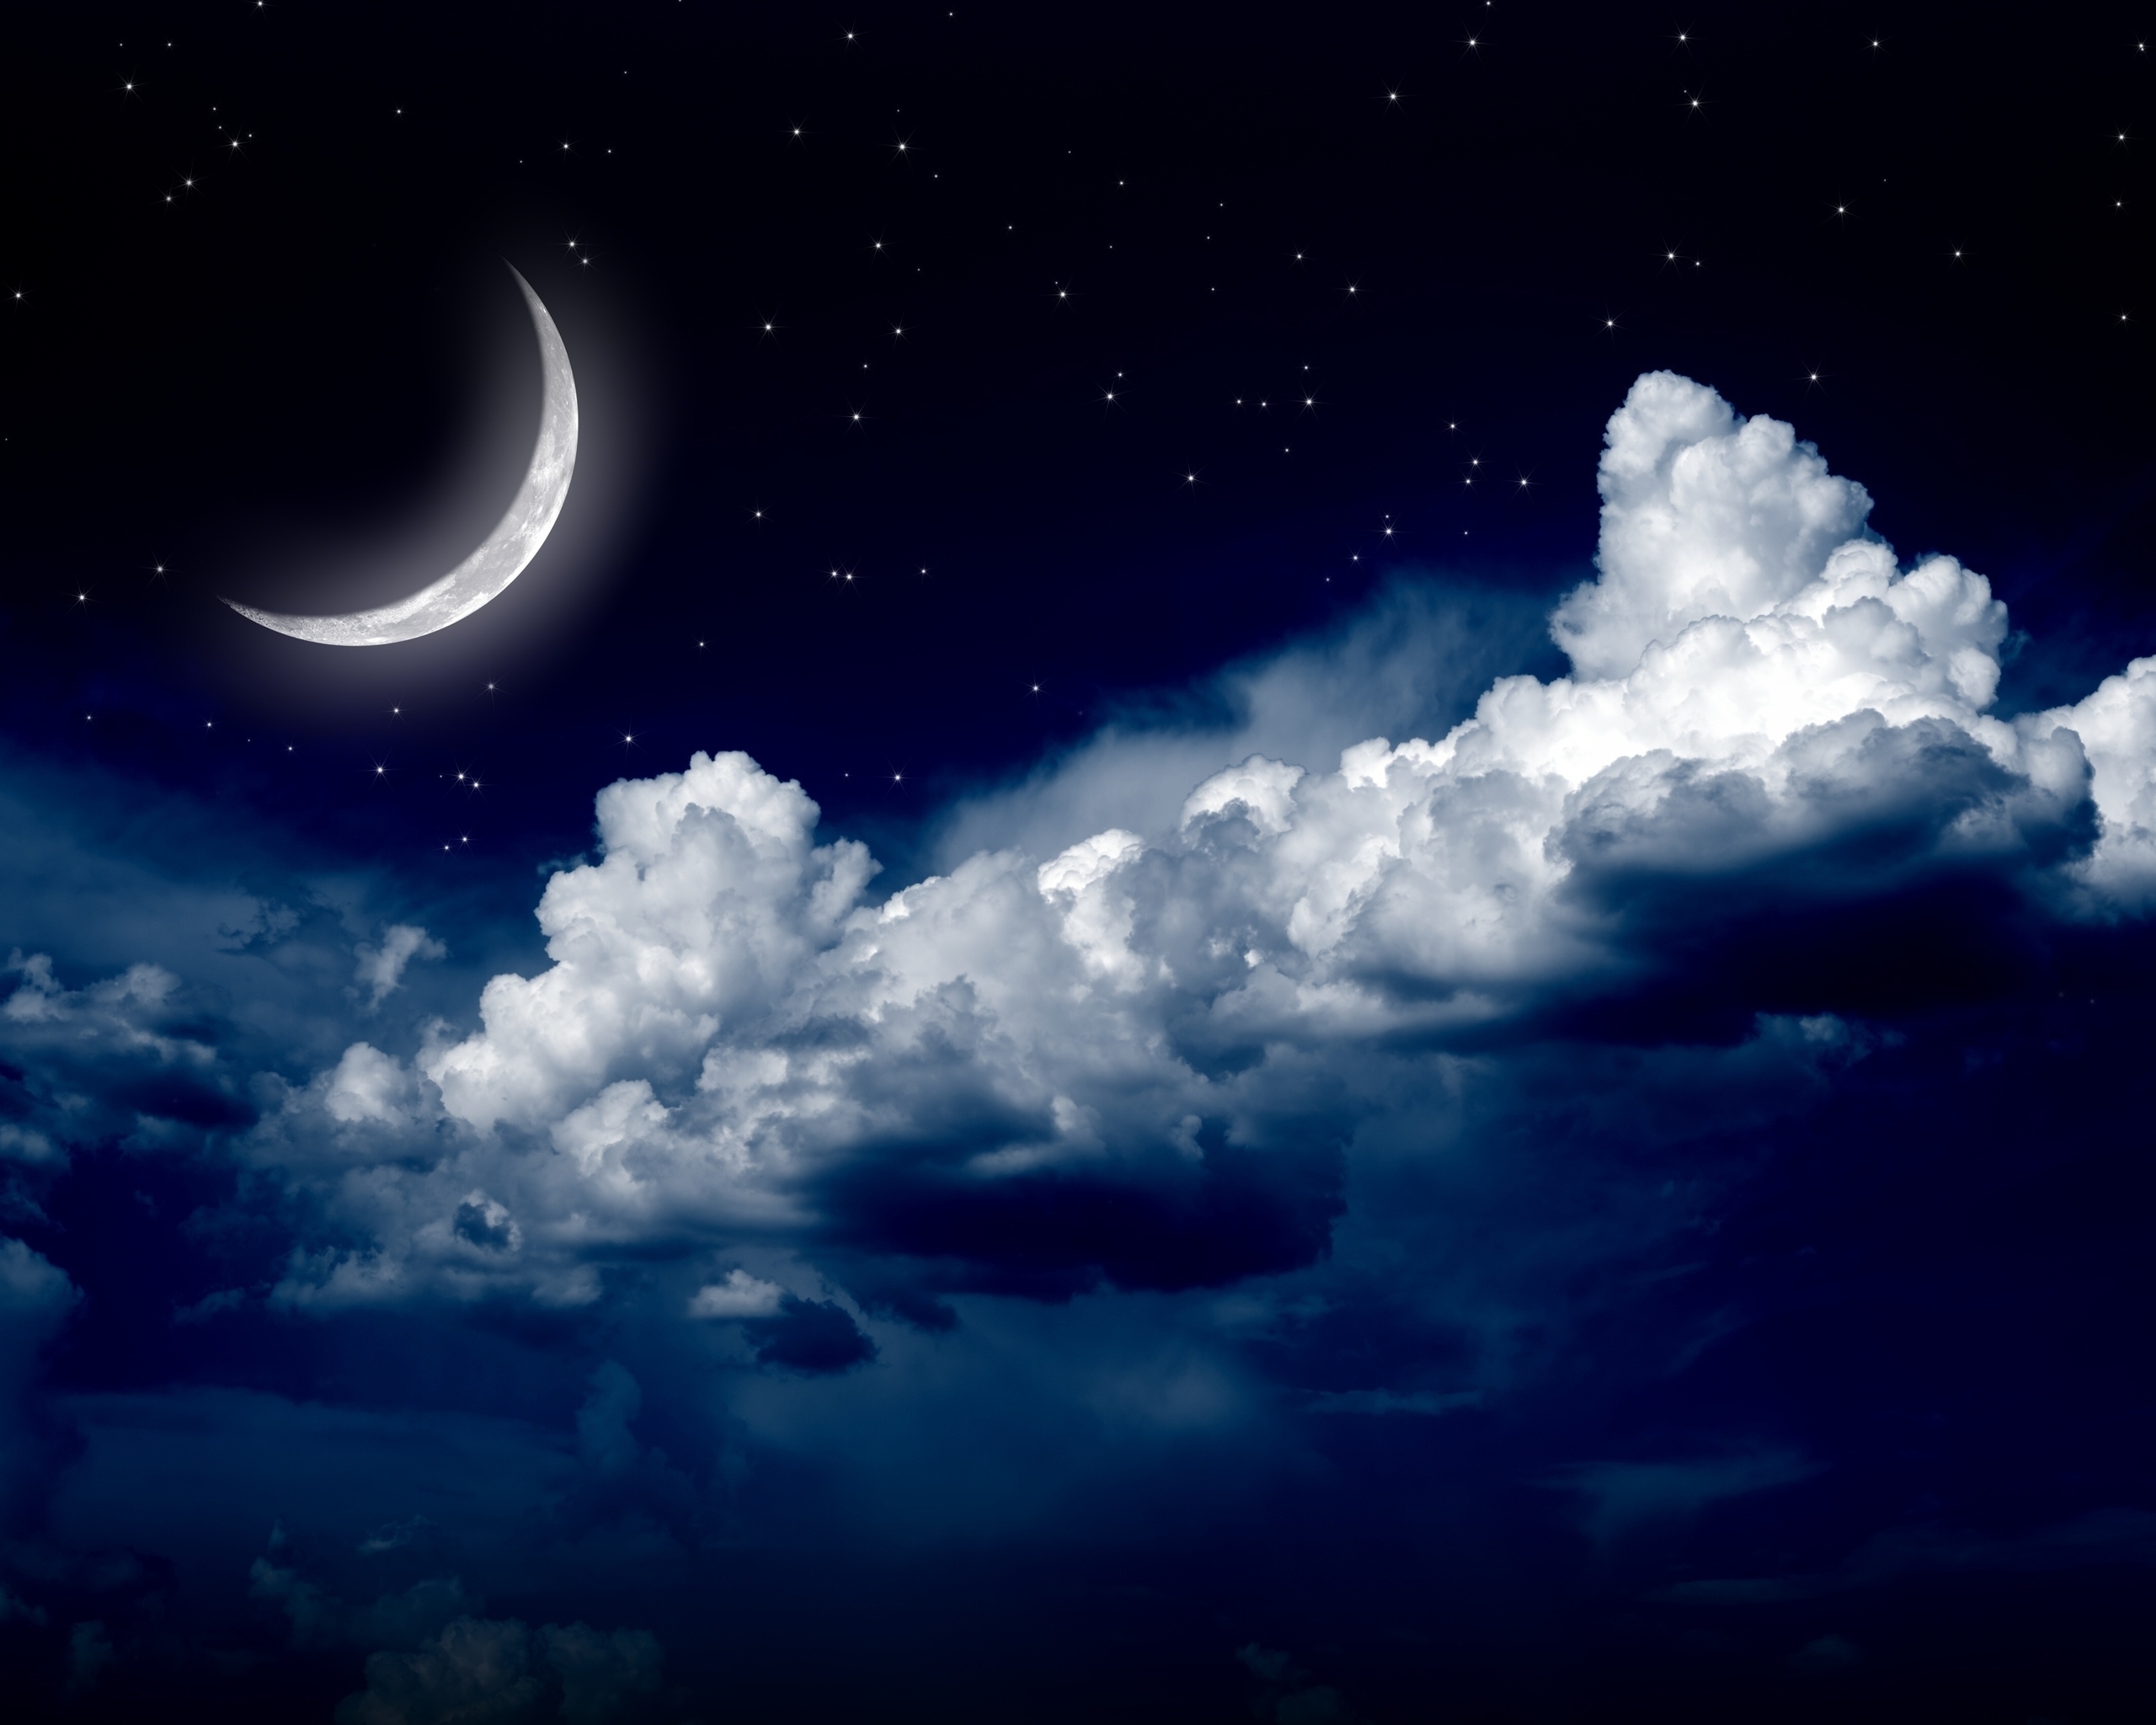 Image: nature, night, month, stars, sky, clouds, night sky